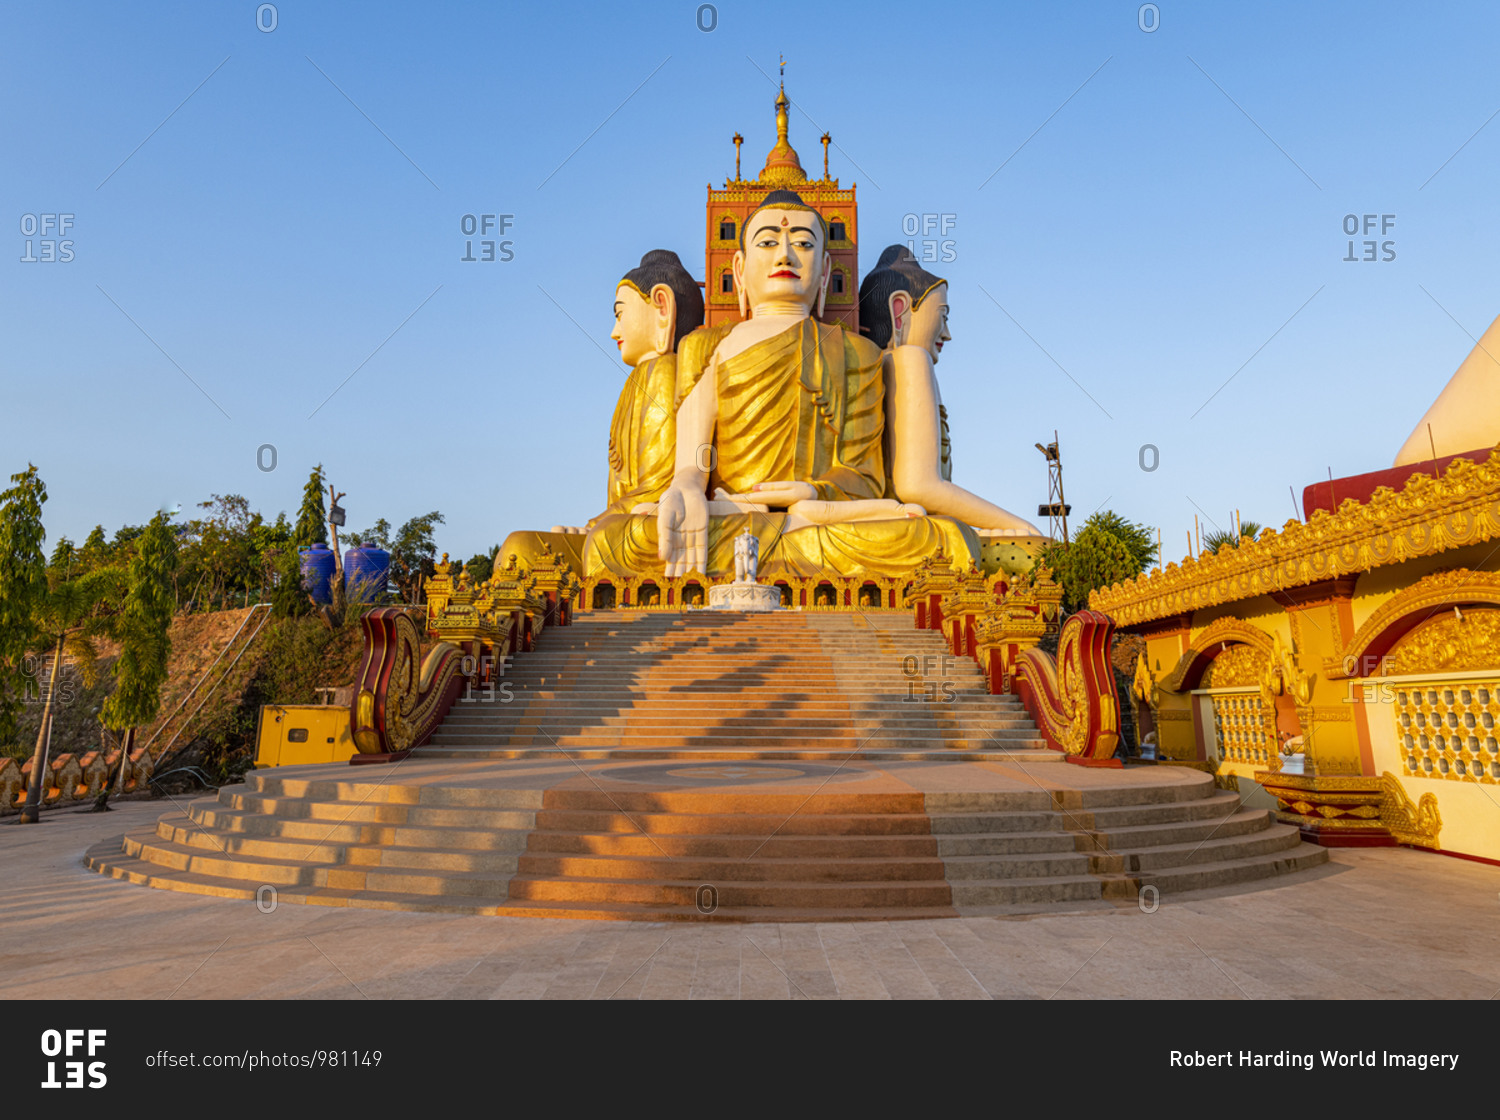 Huge sitting Buddhas, Ko Yin Lay, Pupawadoy Monastery near Ye, Mon state, Myanmar (Burma), Asia